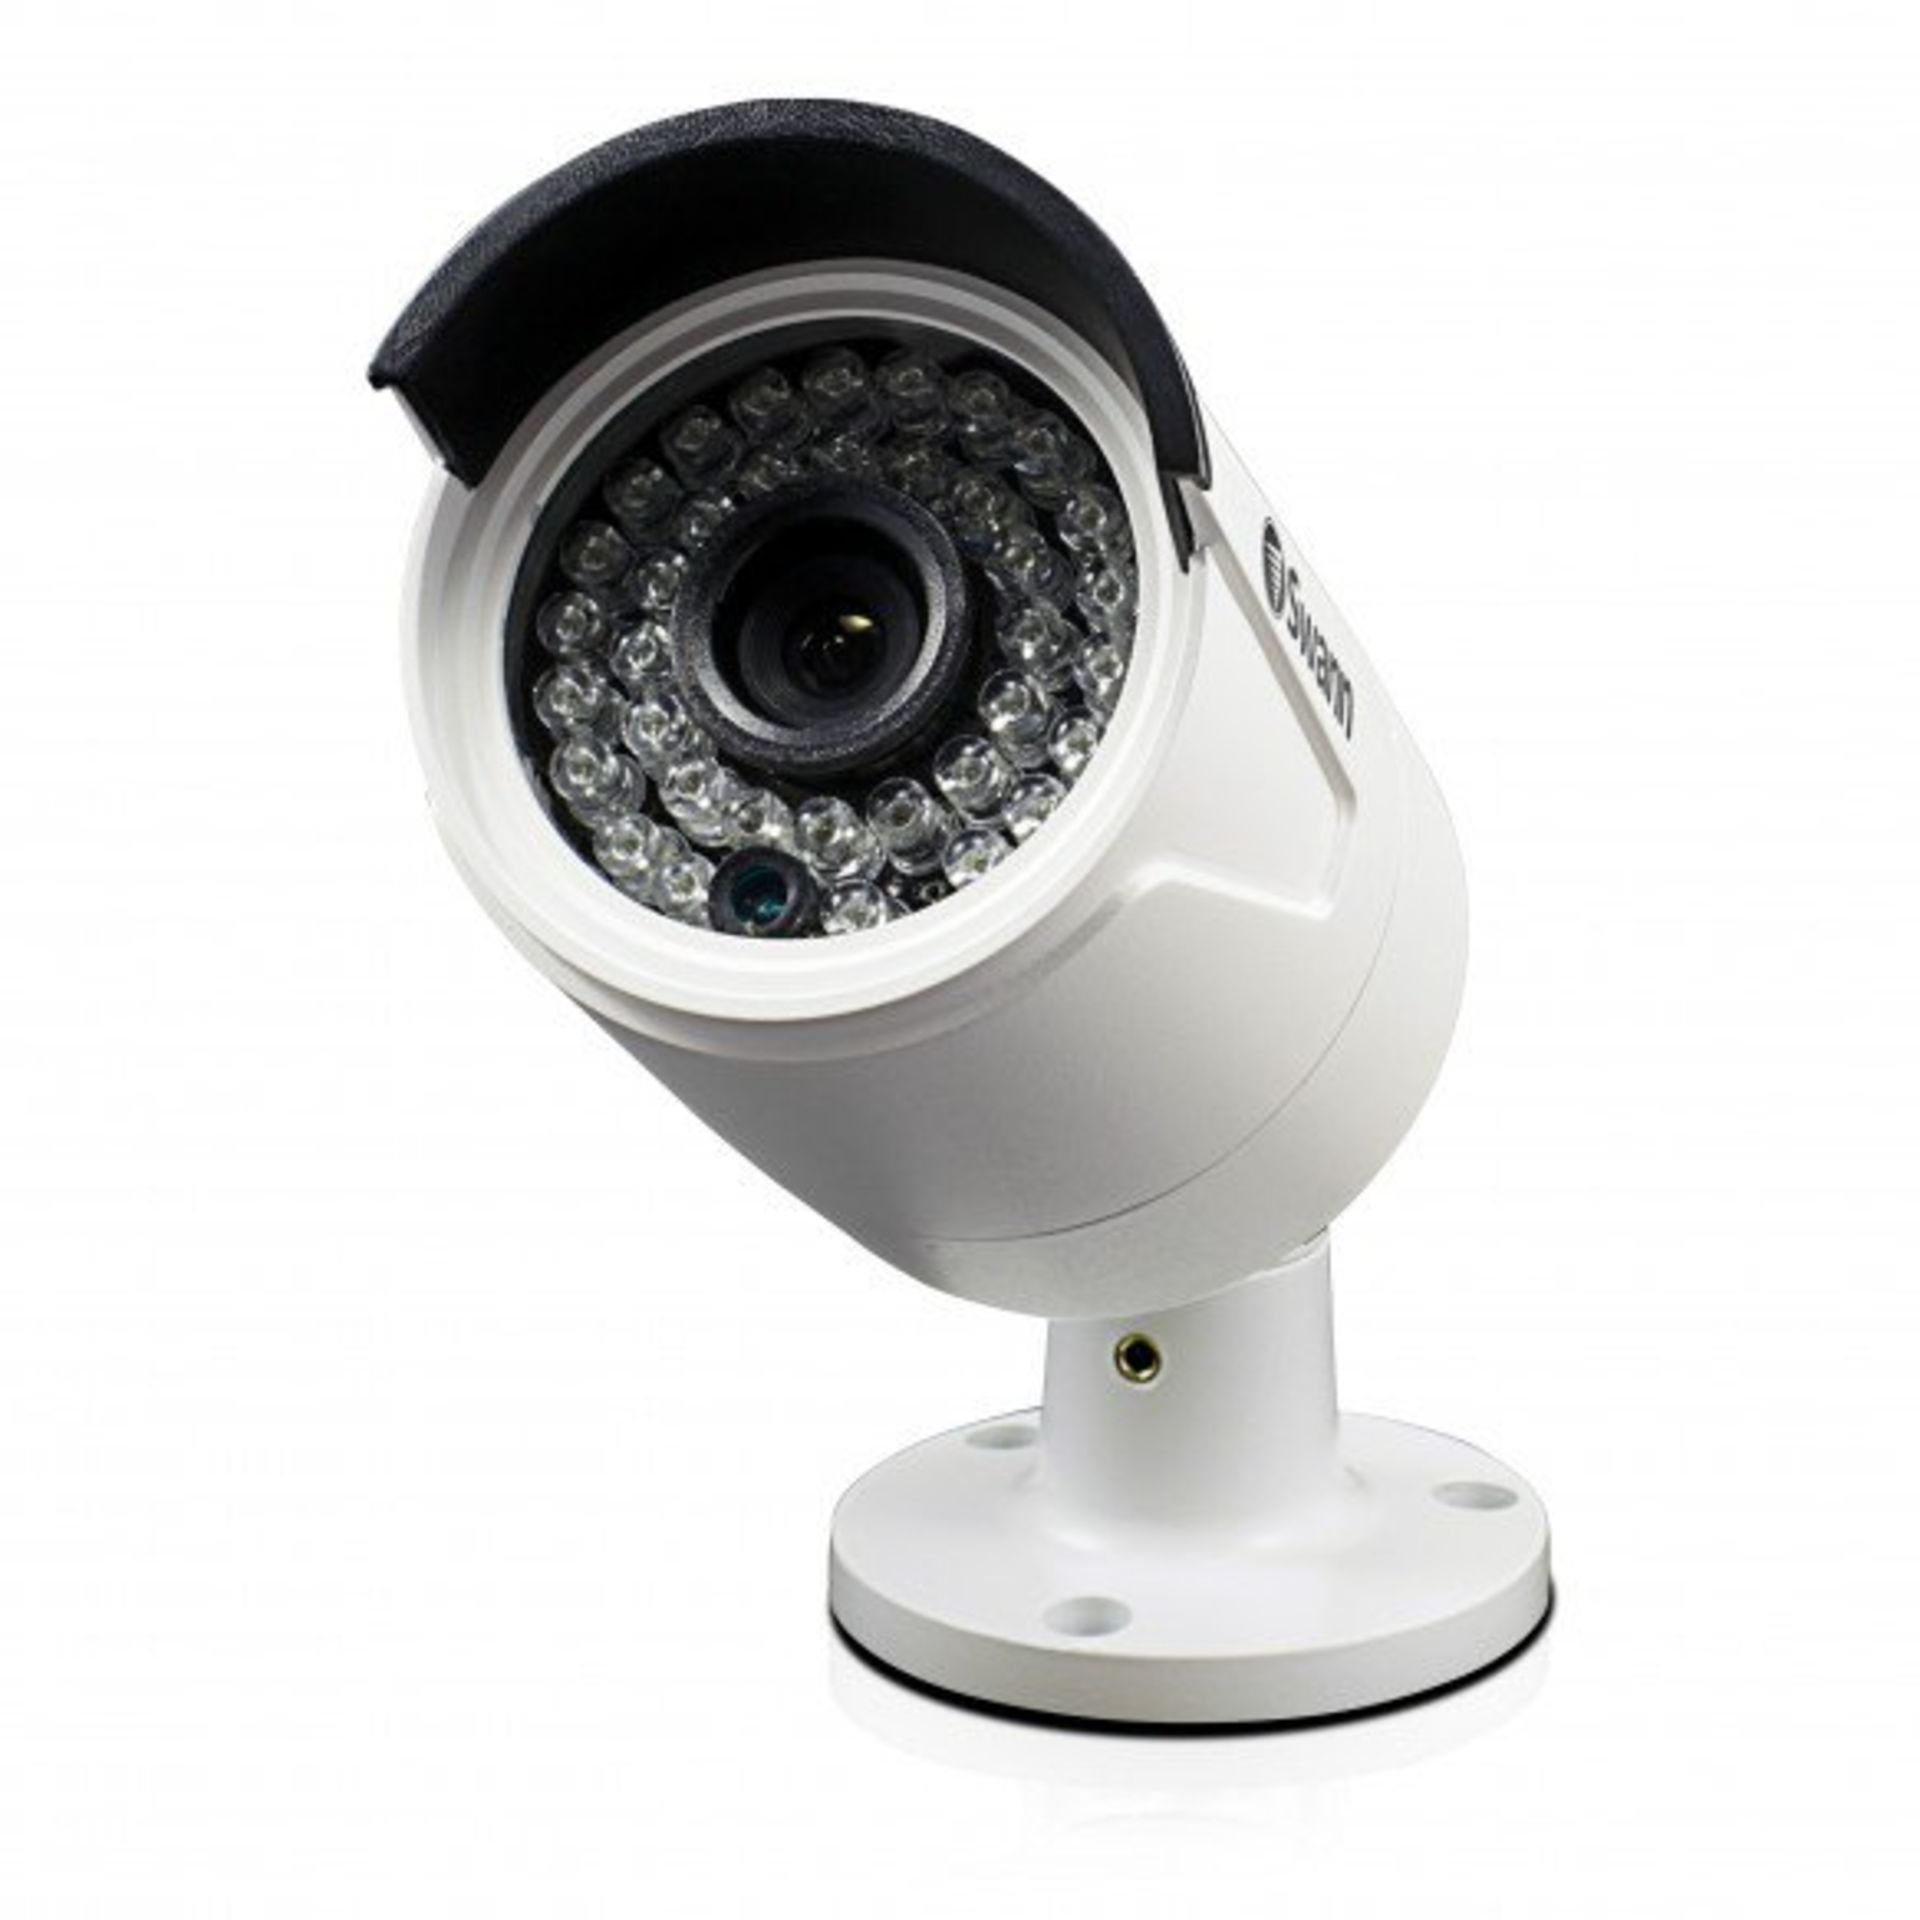 V *TRADE QTY* Grade A Swann NHD 818CAM Super HD Day/Night Security Camera - Night Vision 100ft -